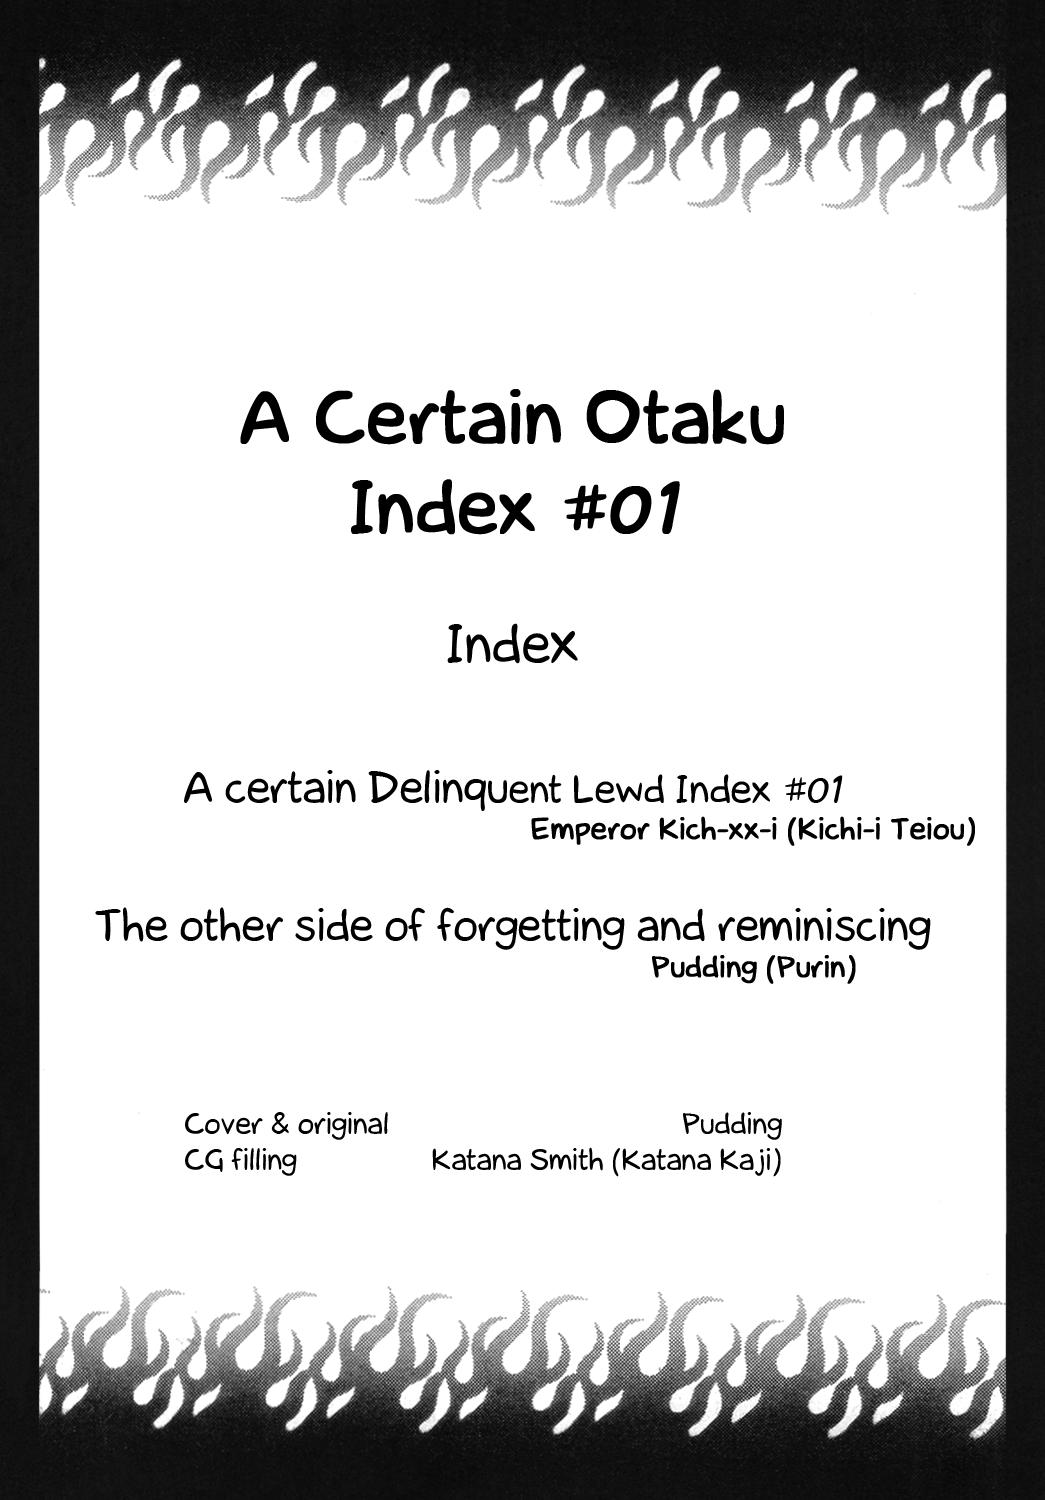 Toaru Otaku no Index #1 | A Certain Otaku Index #1 3